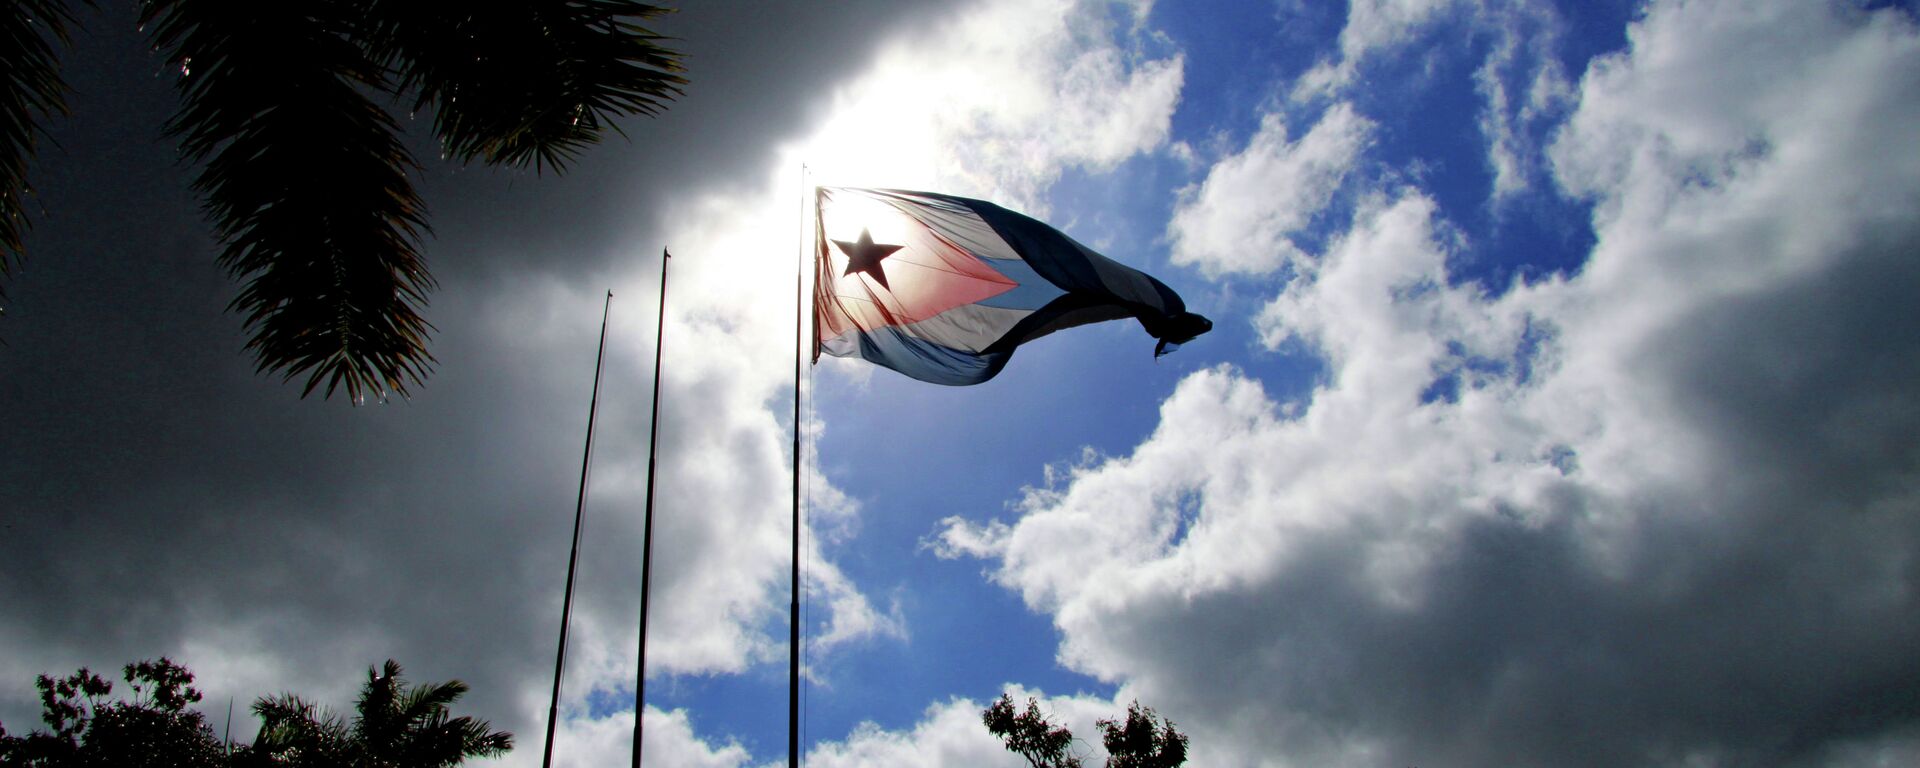 La bandera de Cuba - Sputnik Mundo, 1920, 31.07.2021